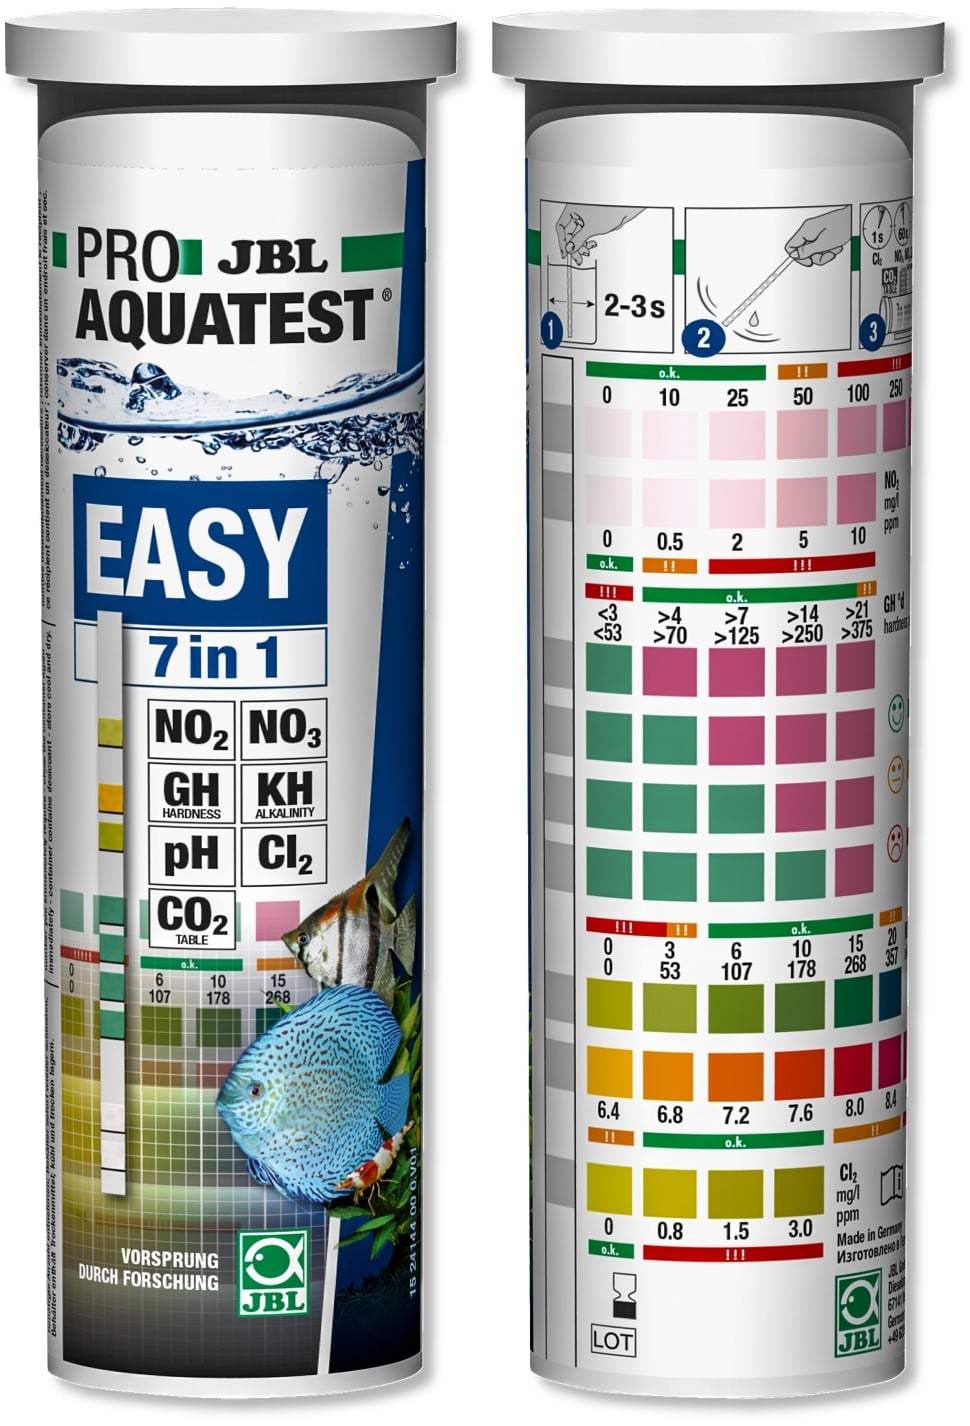 jbl-proaquatest-easy-7-en-1-kit-50-bandelettes-d-analyse-ph-no2-no3-gh-kh-chlore-et-co2-1-min